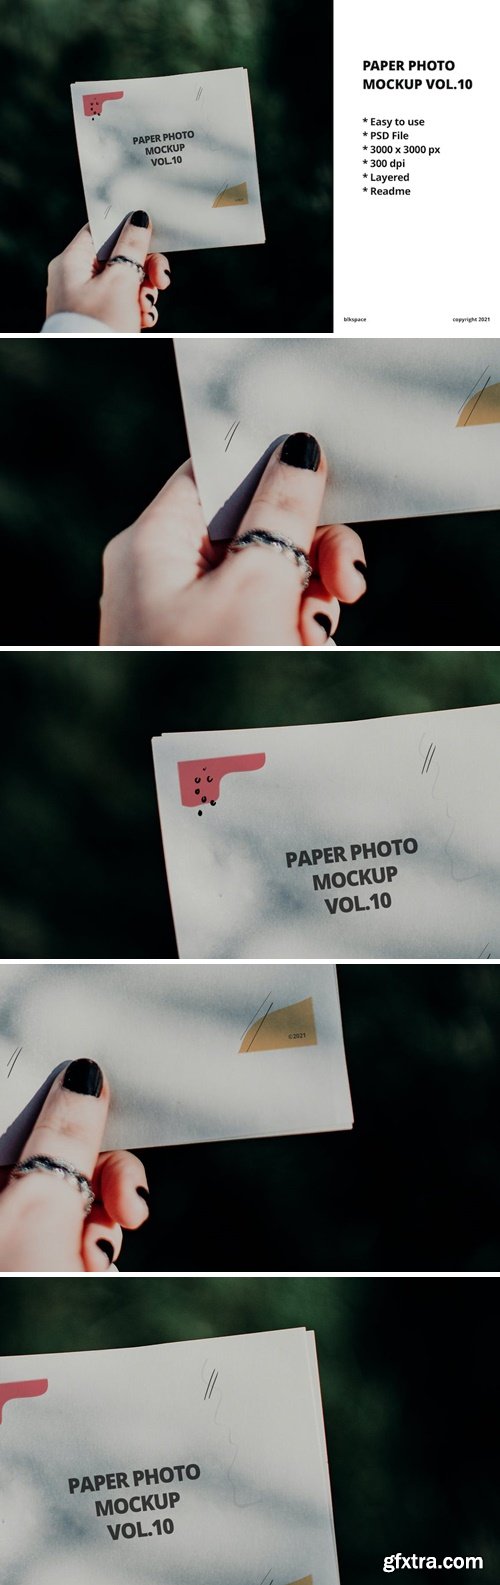 Paper Photo Mockup Vol.10 XVAXG4R